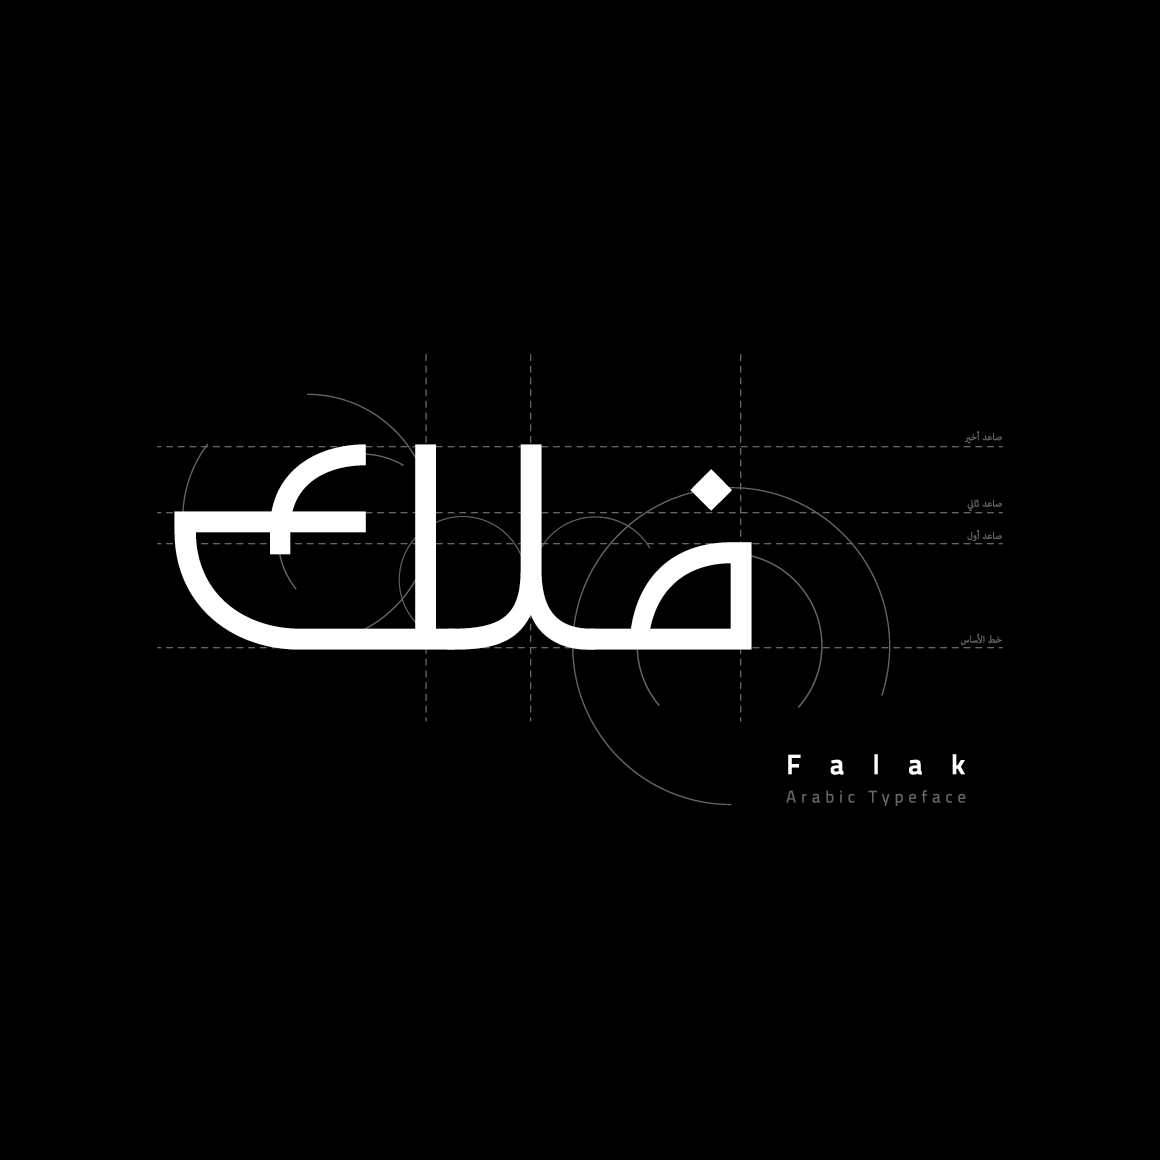 Falak - Arabic Font main cover.